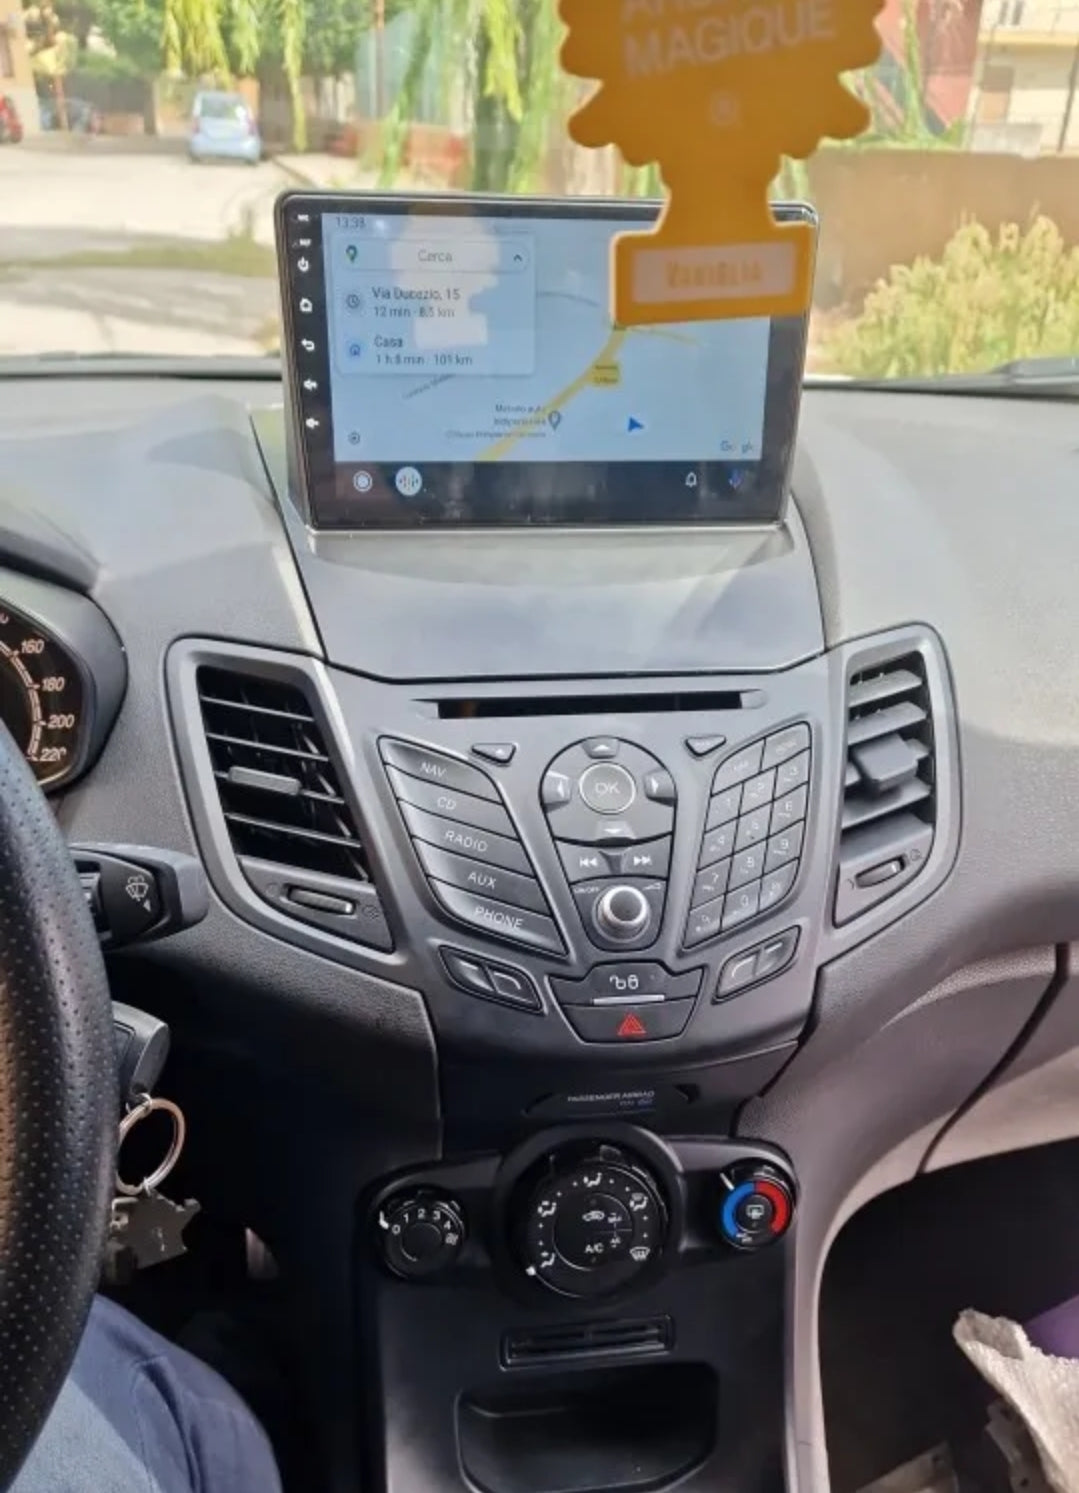 Autoradio per FORD FIESTA MK6 [2009 - 2017] - Autoradio con Sistema Intelligente, GPS, Navigatore, 2Din 9"Pollici, Wifi